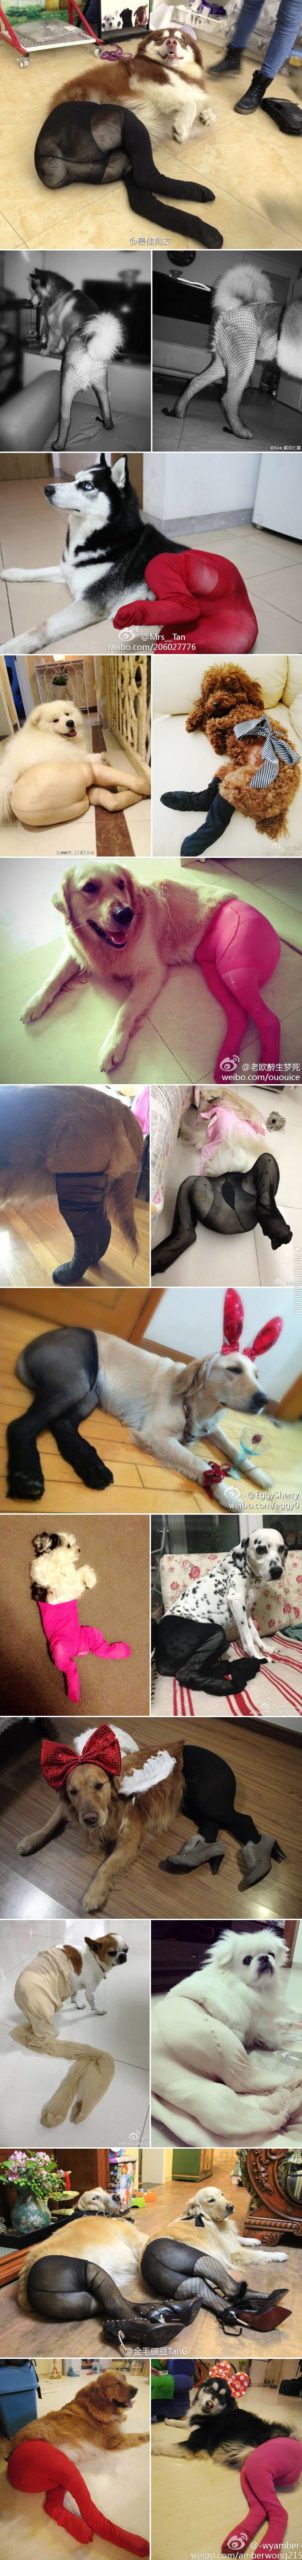 Dogs+wearing+stockings.